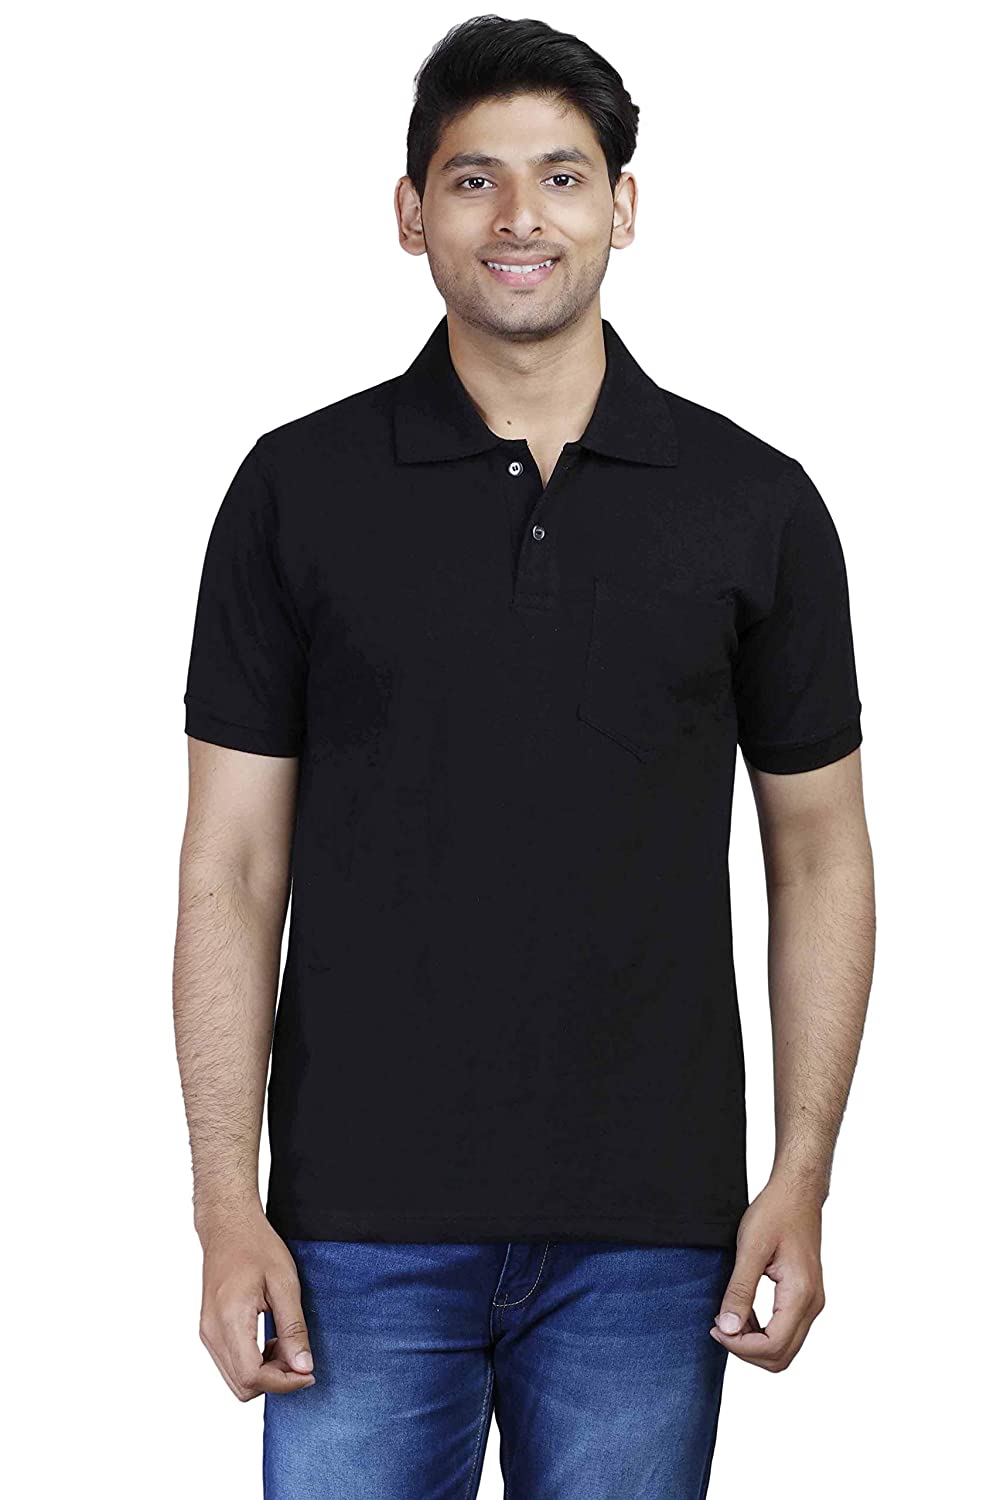 Men's polo Black T-shirt